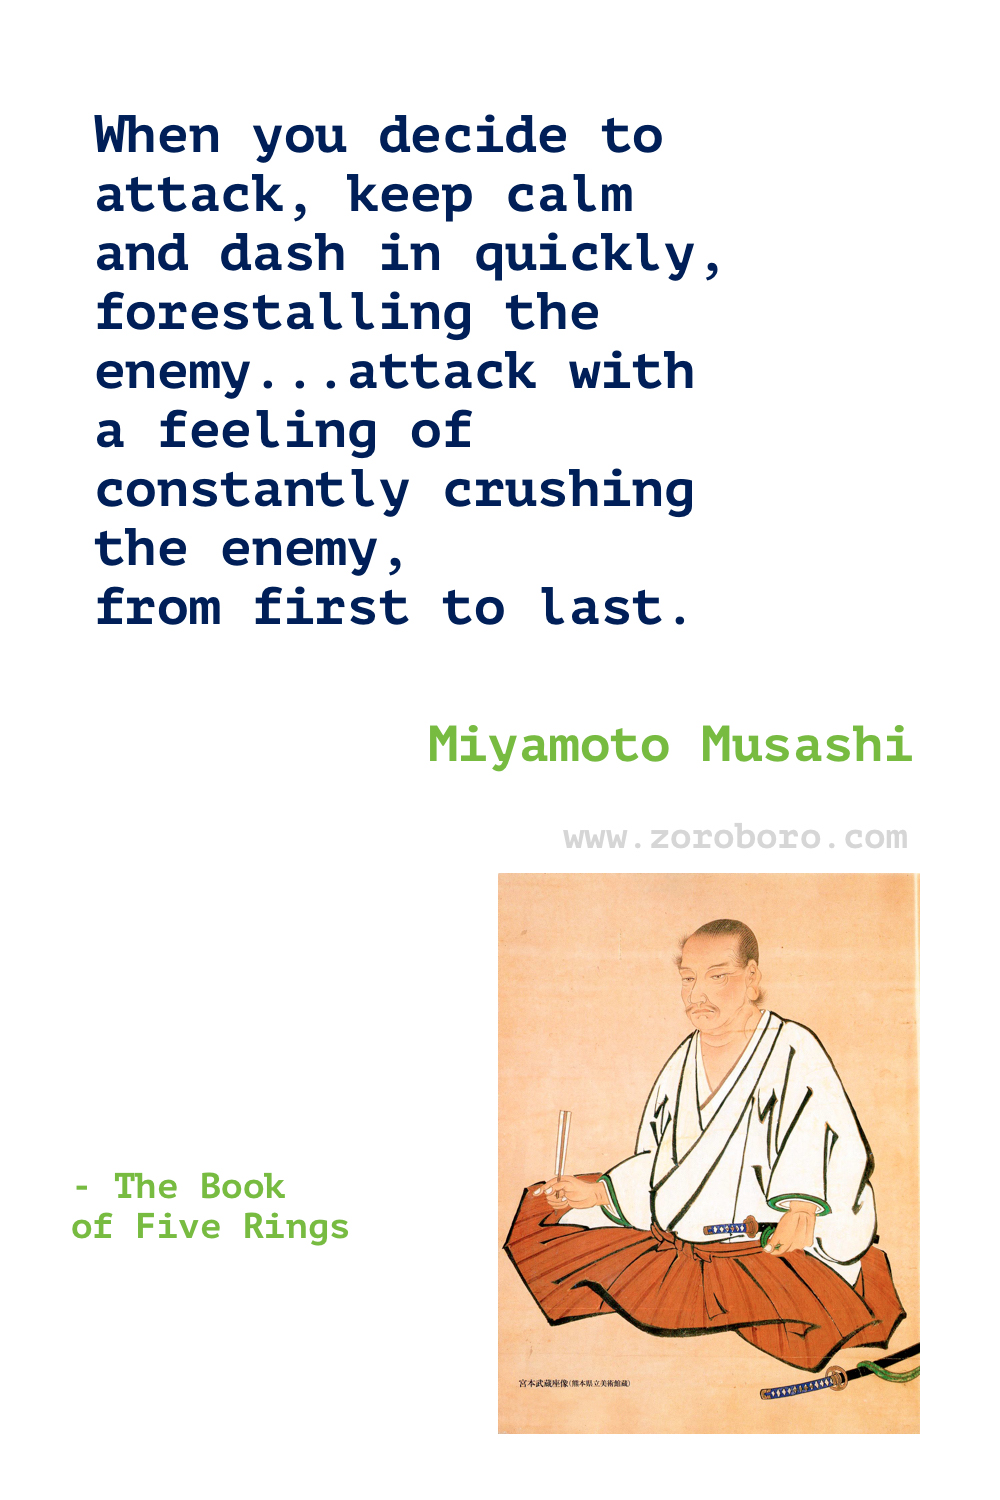 Miyamoto Musashi Quotes, The Book of Five Rings Quotes, Miyamoto Musashi book Quotes, Philosophy, Miyamoto Musashi Teachings, Miyamoto musashi strategy.